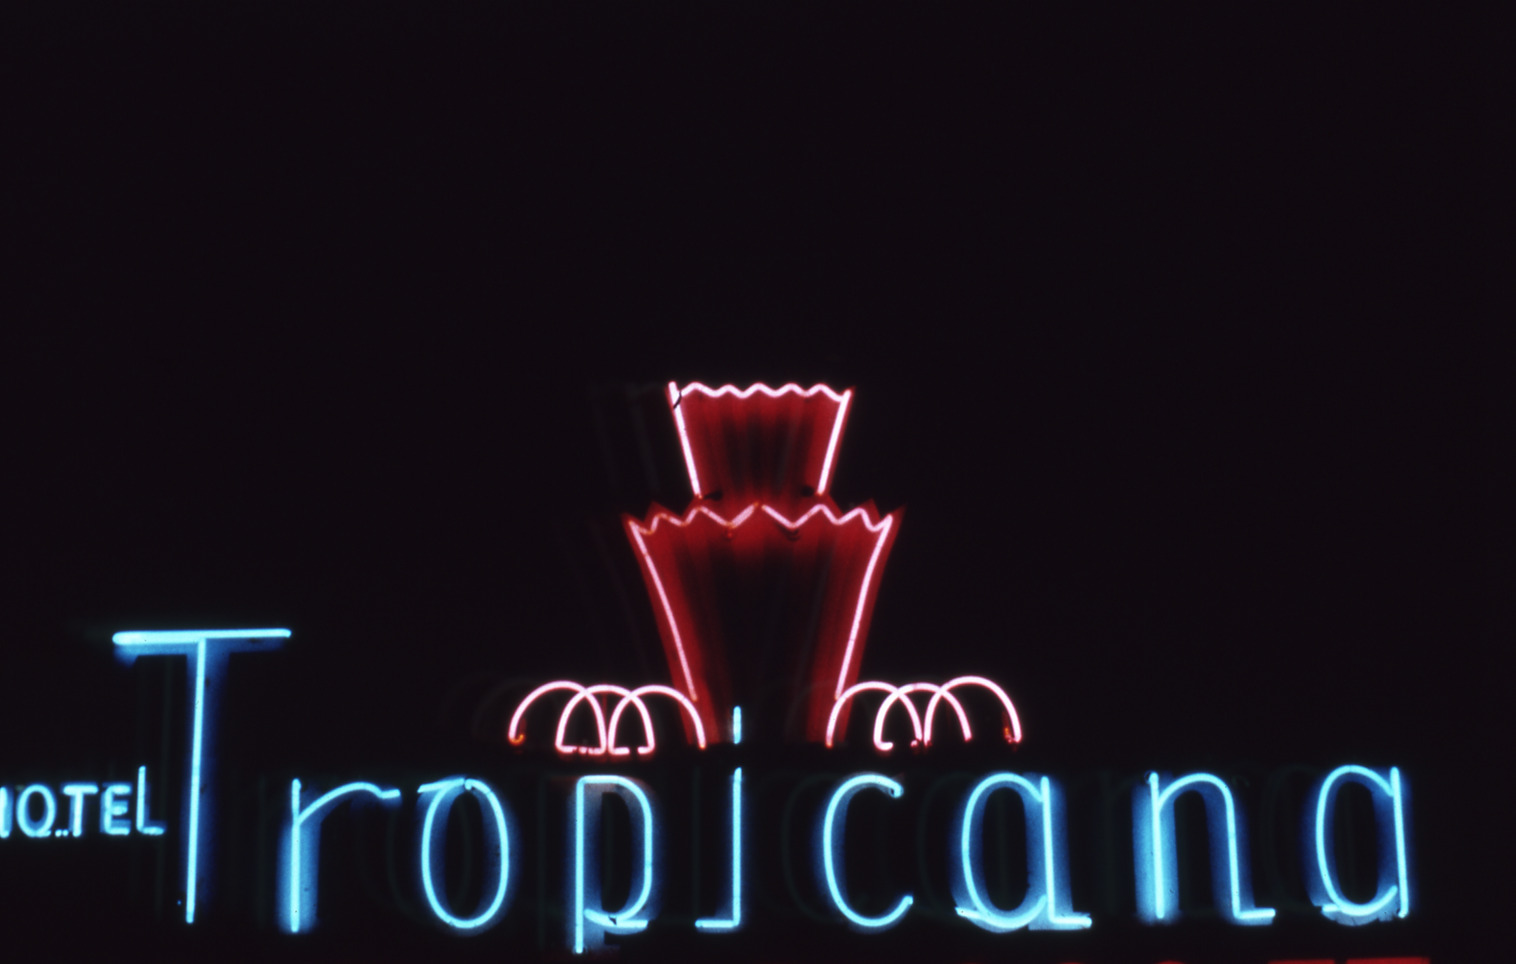 Motel Tropicana lettering sign, Las Vegas, Nevada: photographic print